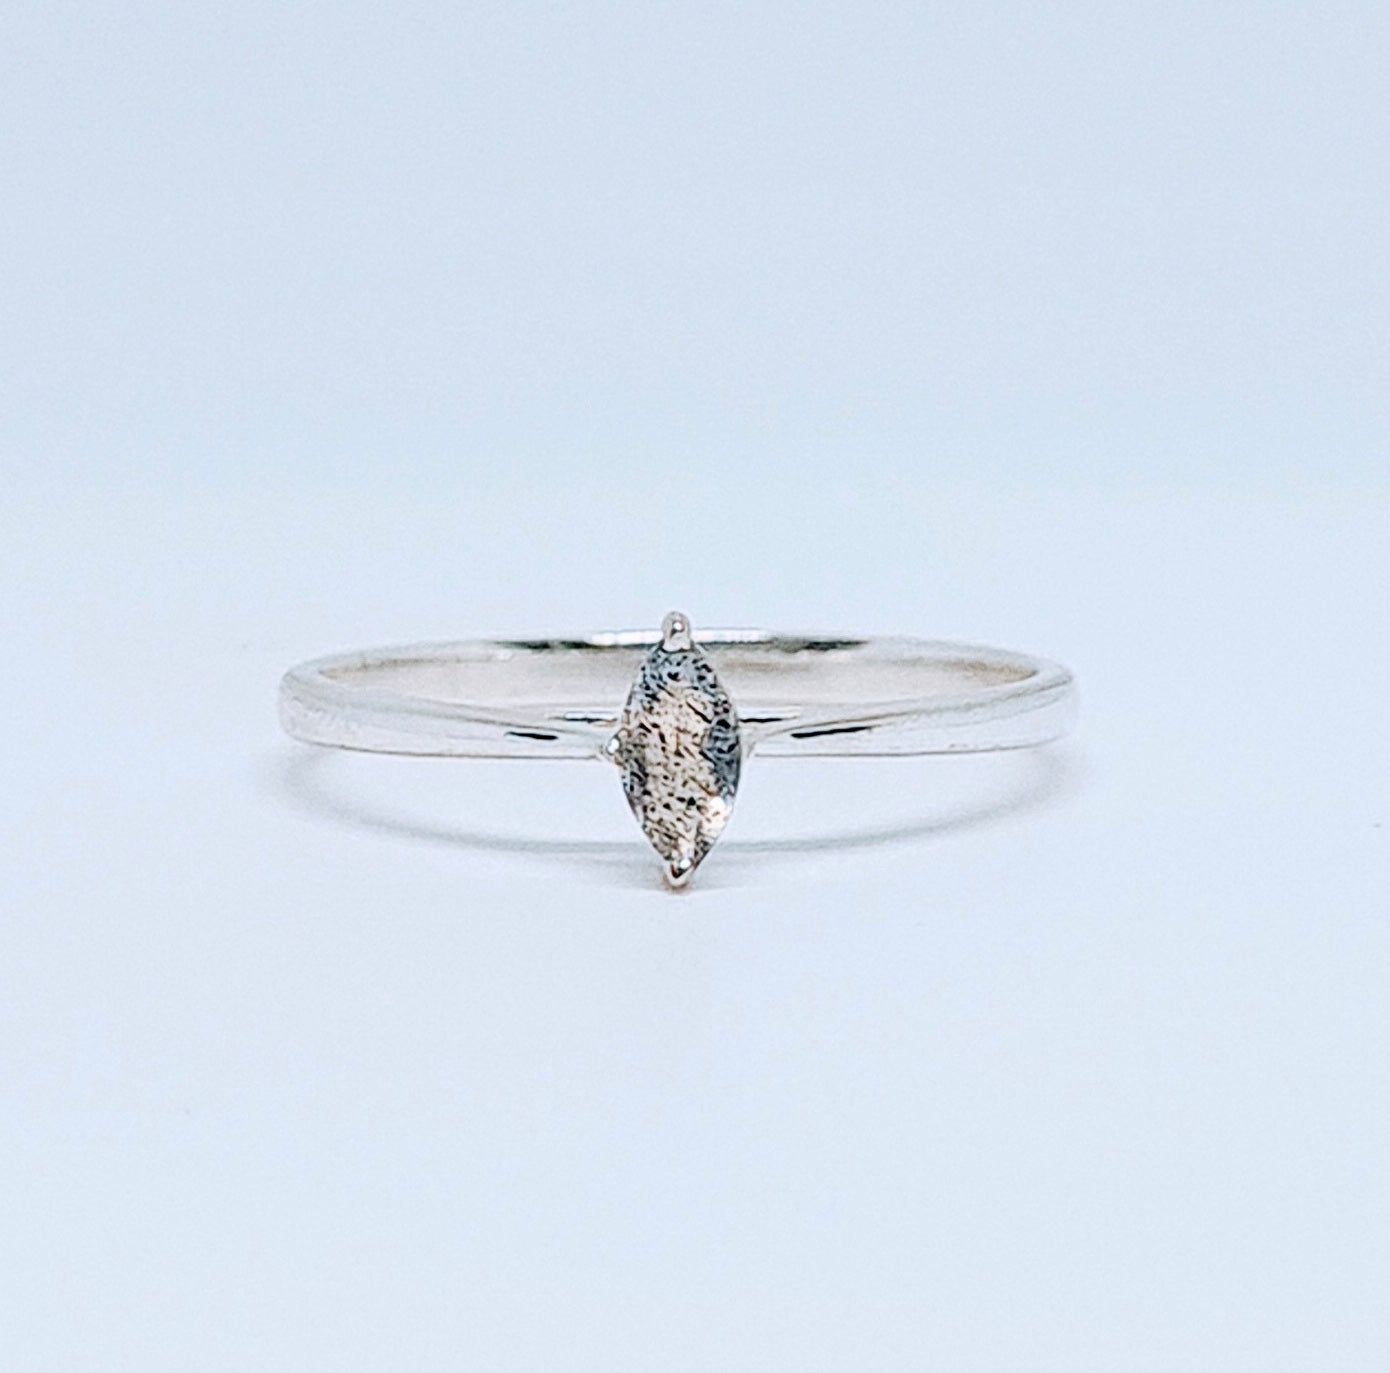 A labradorite minimal marquis gemstone ring in silver